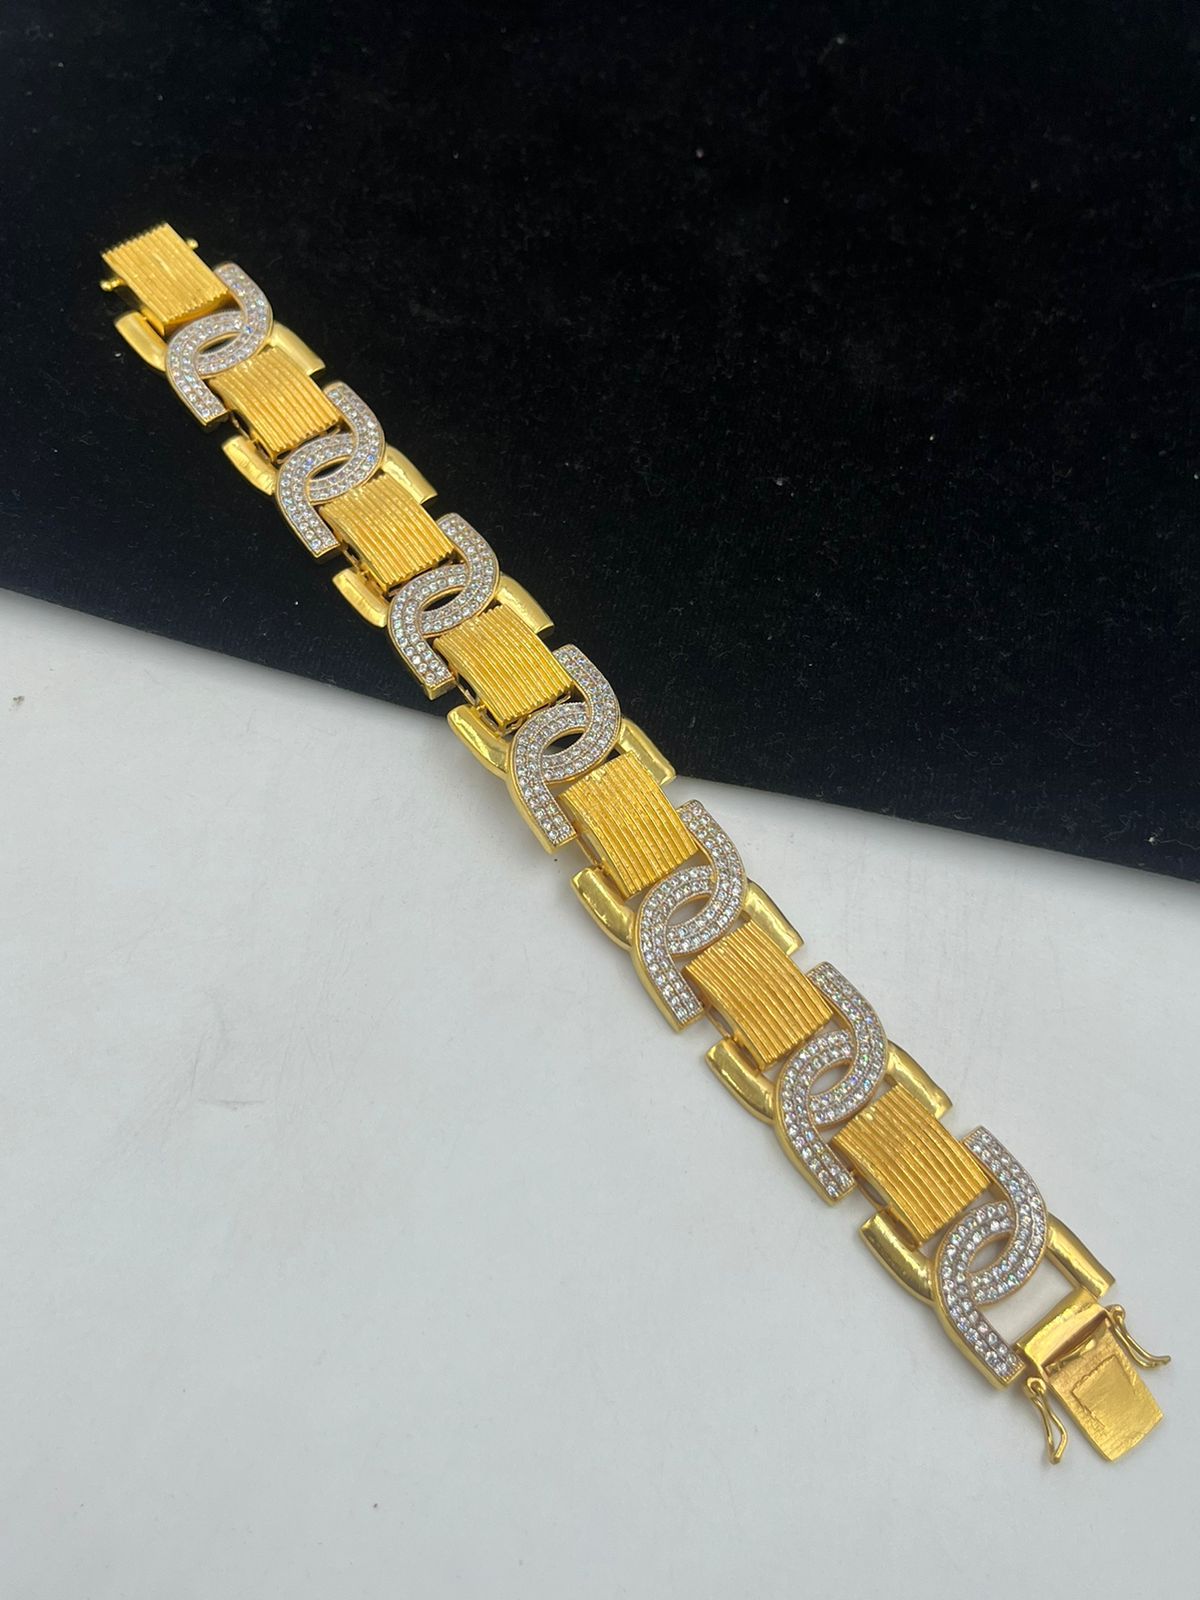 Buy Attractive Ruby Stone One Gram Gold Bracelet Designs Online